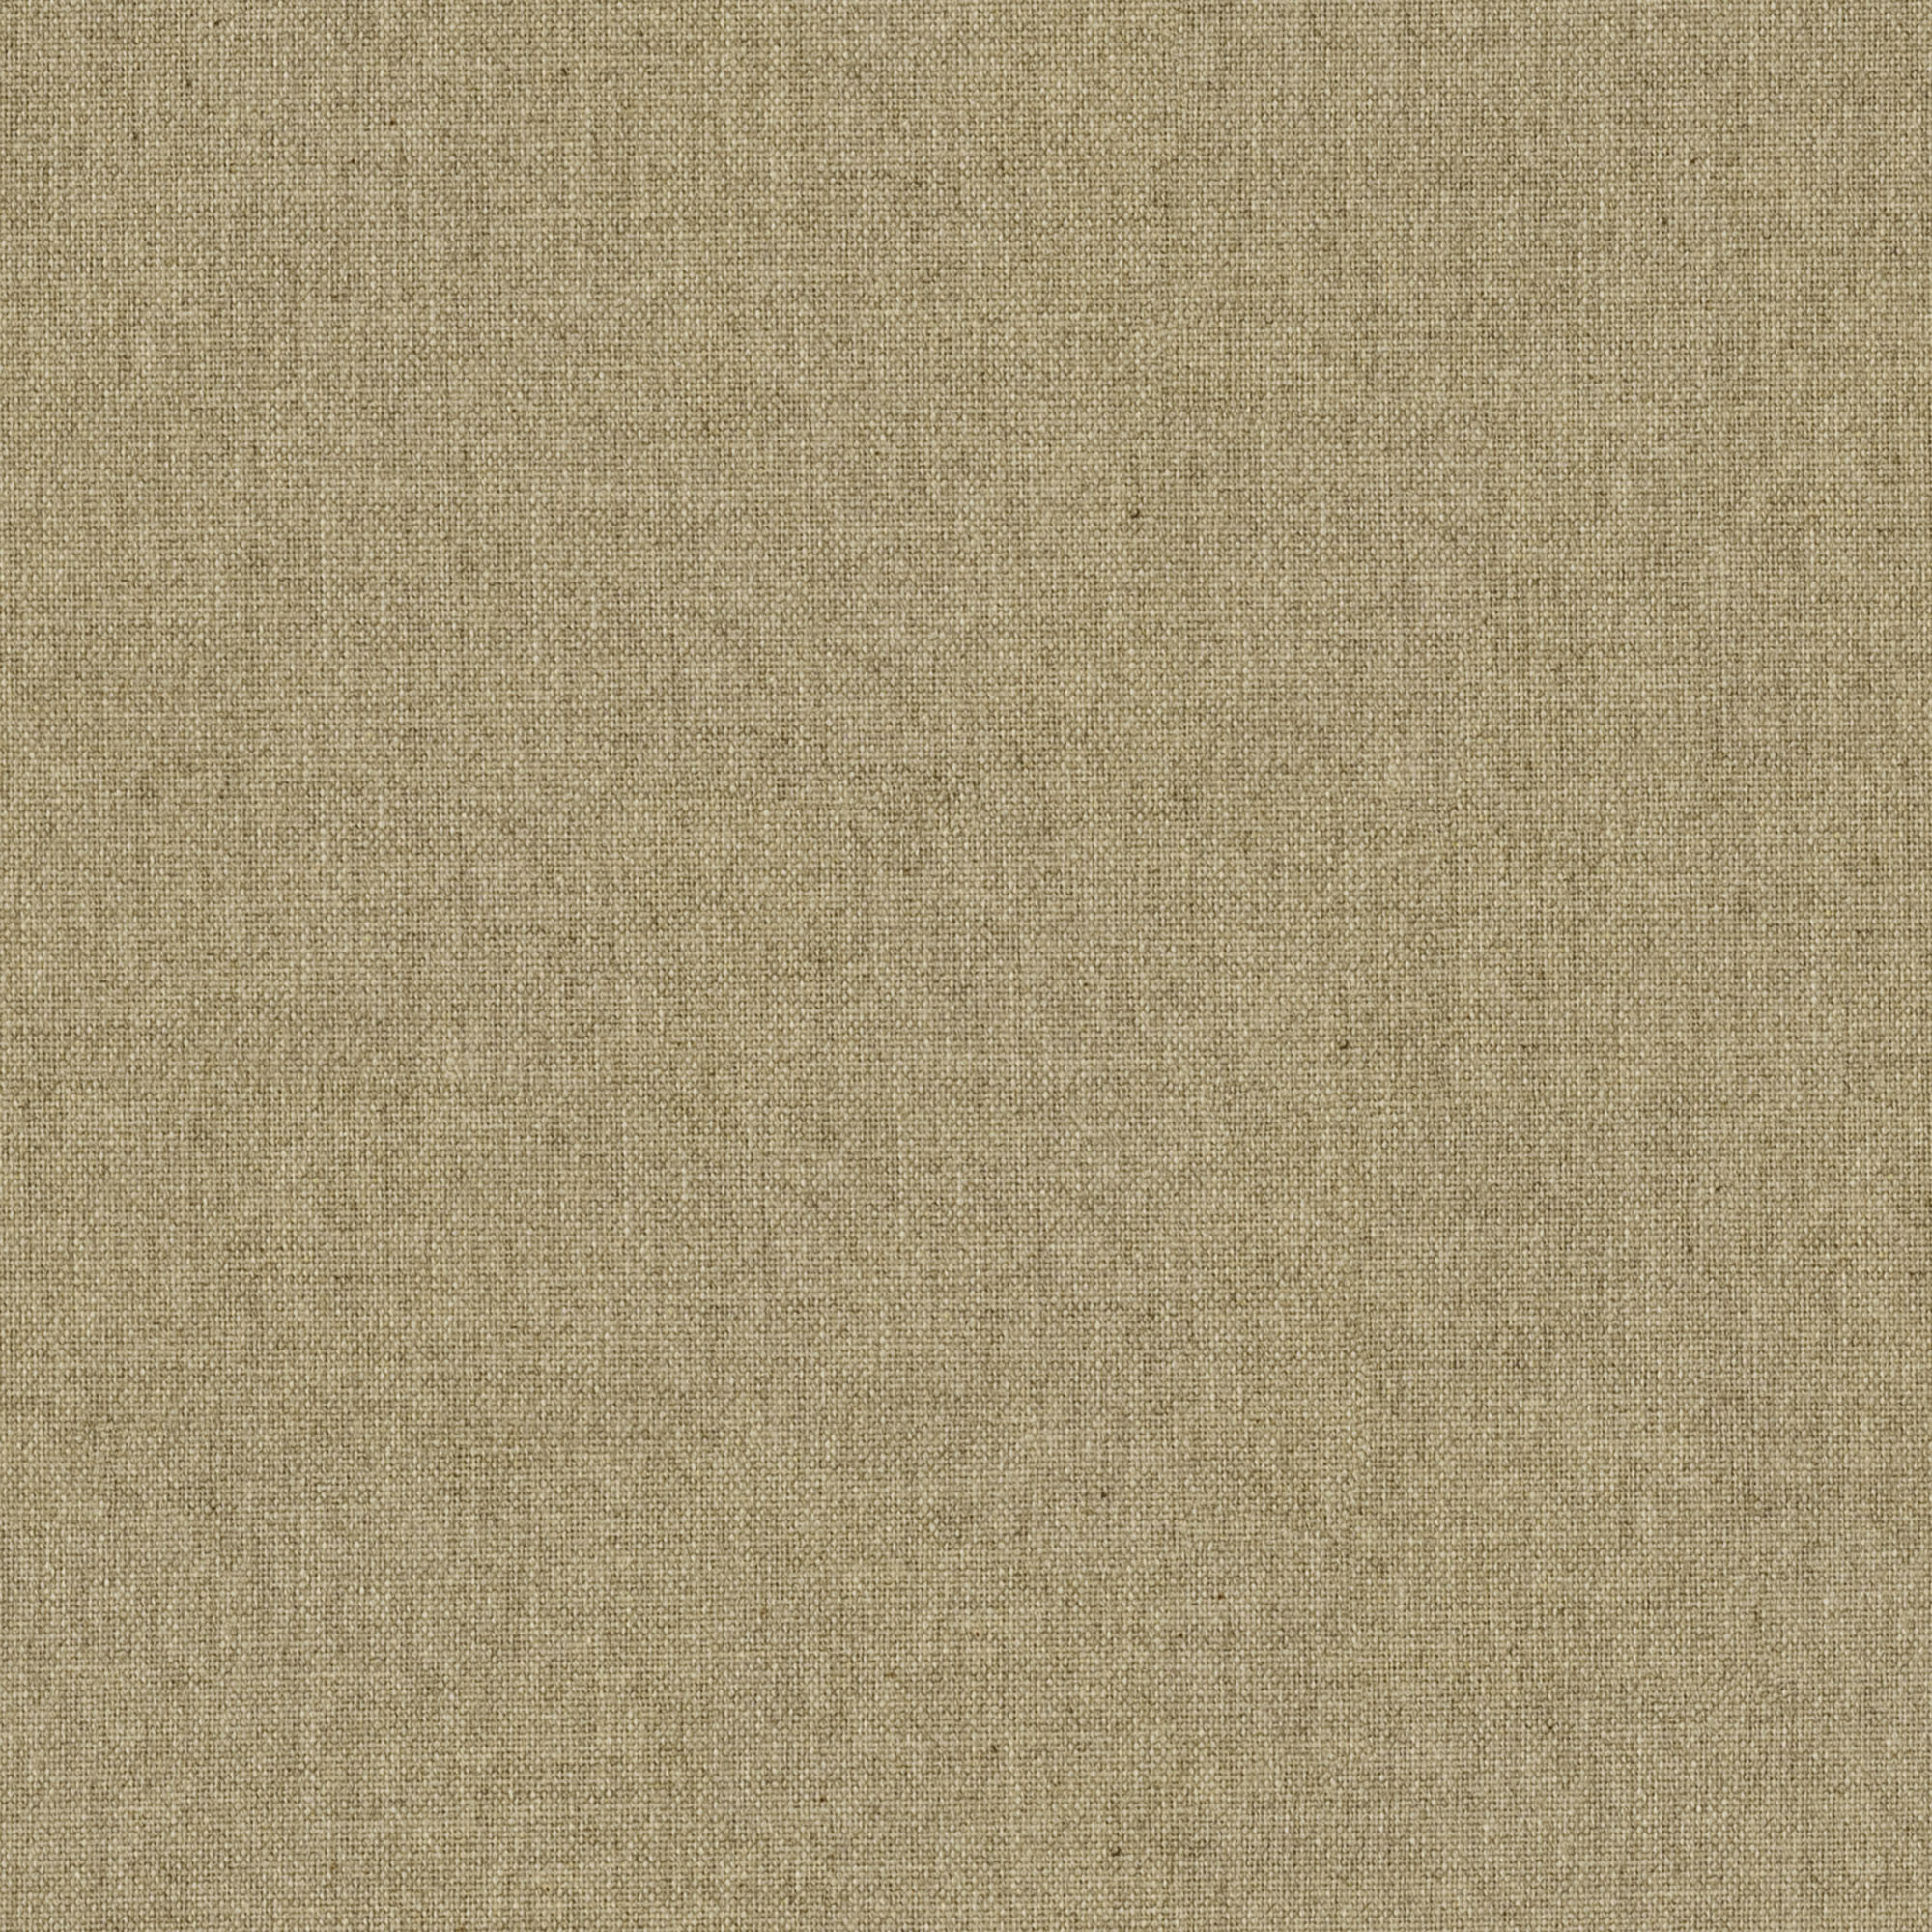 Melange Plain Wheat Husk Fabric